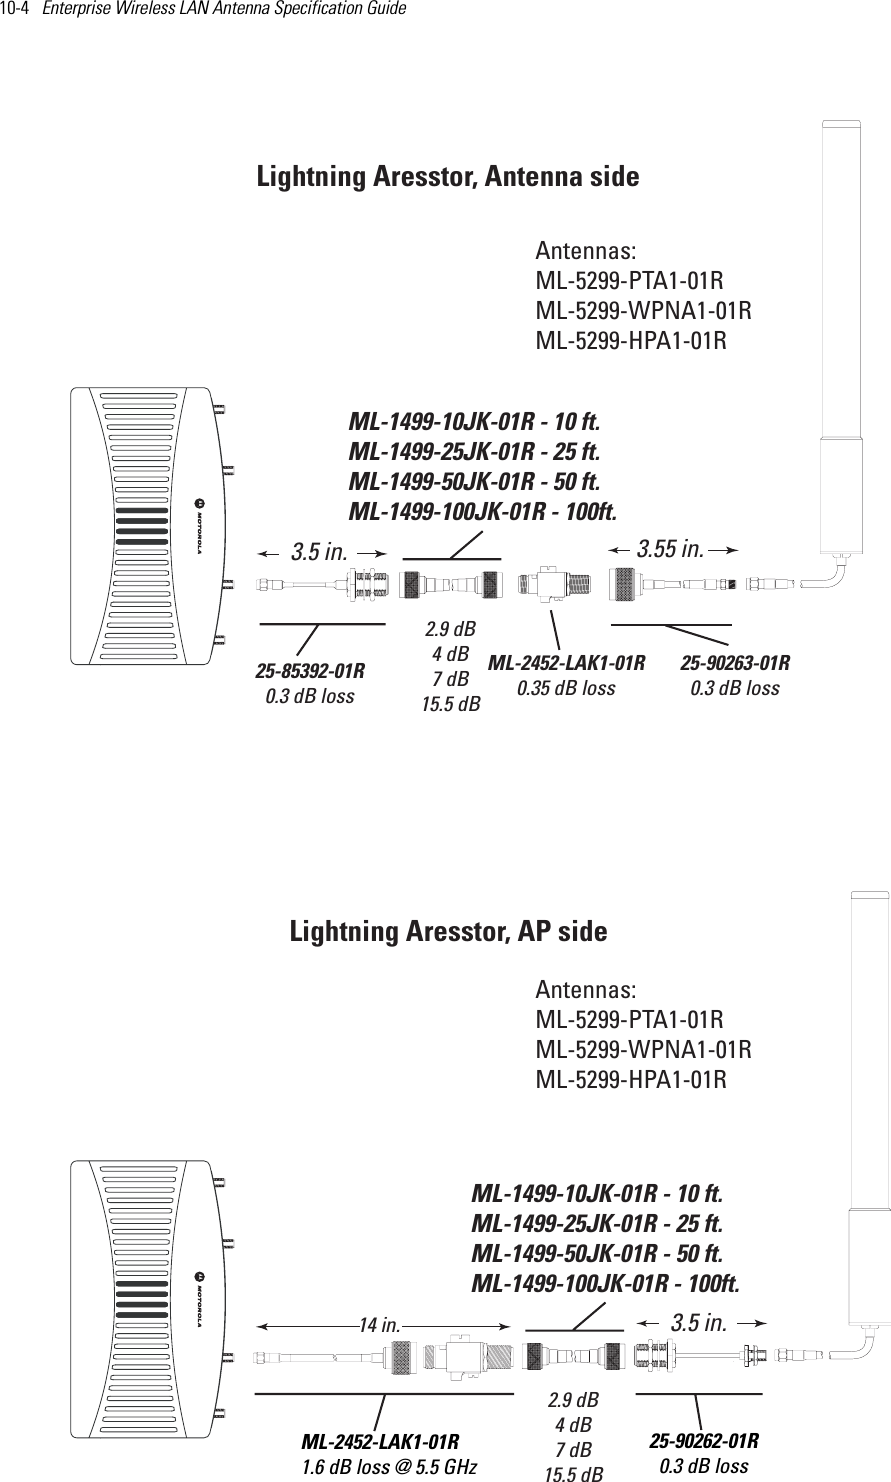 10-4   Enterprise Wireless LAN Antenna Specification Guide  Antennas:ML-5299-PTA1-01RML-5299-WPNA1-01RML-5299-HPA1-01RAntennas:ML-5299-PTA1-01RML-5299-WPNA1-01RML-5299-HPA1-01RML-2452-LAK1-01R0.35 dB lossLightning Aresstor, AP sideLightning Aresstor, Antenna sideML-1499-10JK-01R - 10 ft.ML-1499-25JK-01R - 25 ft.ML-1499-50JK-01R - 50 ft.ML-1499-100JK-01R - 100ft. 2.9 dB4 dB7 dB15.5 dBML-1499-10JK-01R - 10 ft.ML-1499-25JK-01R - 25 ft.ML-1499-50JK-01R - 50 ft.ML-1499-100JK-01R - 100ft. 2.9 dB4 dB7 dB15.5 dBML-2452-LAK1-01R1.6 dB loss @ 5.5 GHz14 in.  25-90262-01R0.3 dB loss3.5 in.25-90263-01R0.3 dB loss3.55 in.25-85392-01R0.3 dB loss3.5 in.